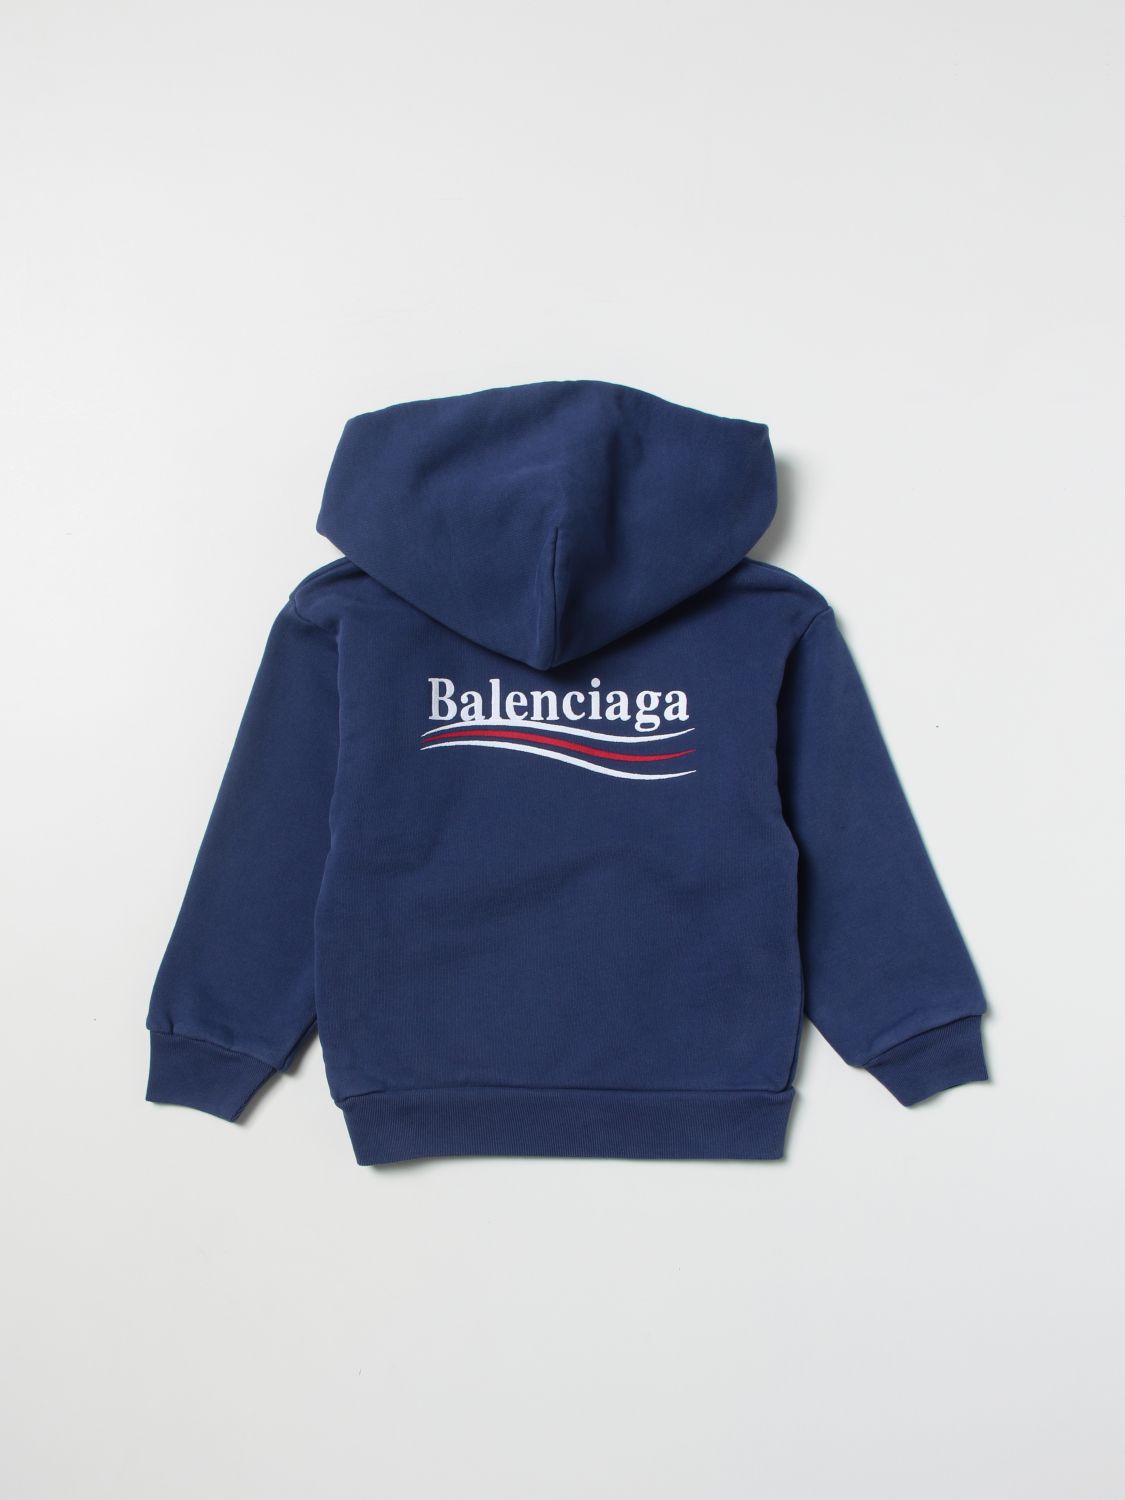 Tal højt Intakt at retfærdiggøre BALENCIAGA: Political Campaign hoodie - Blue | Balenciaga sweater  682019TMVE6 online at GIGLIO.COM